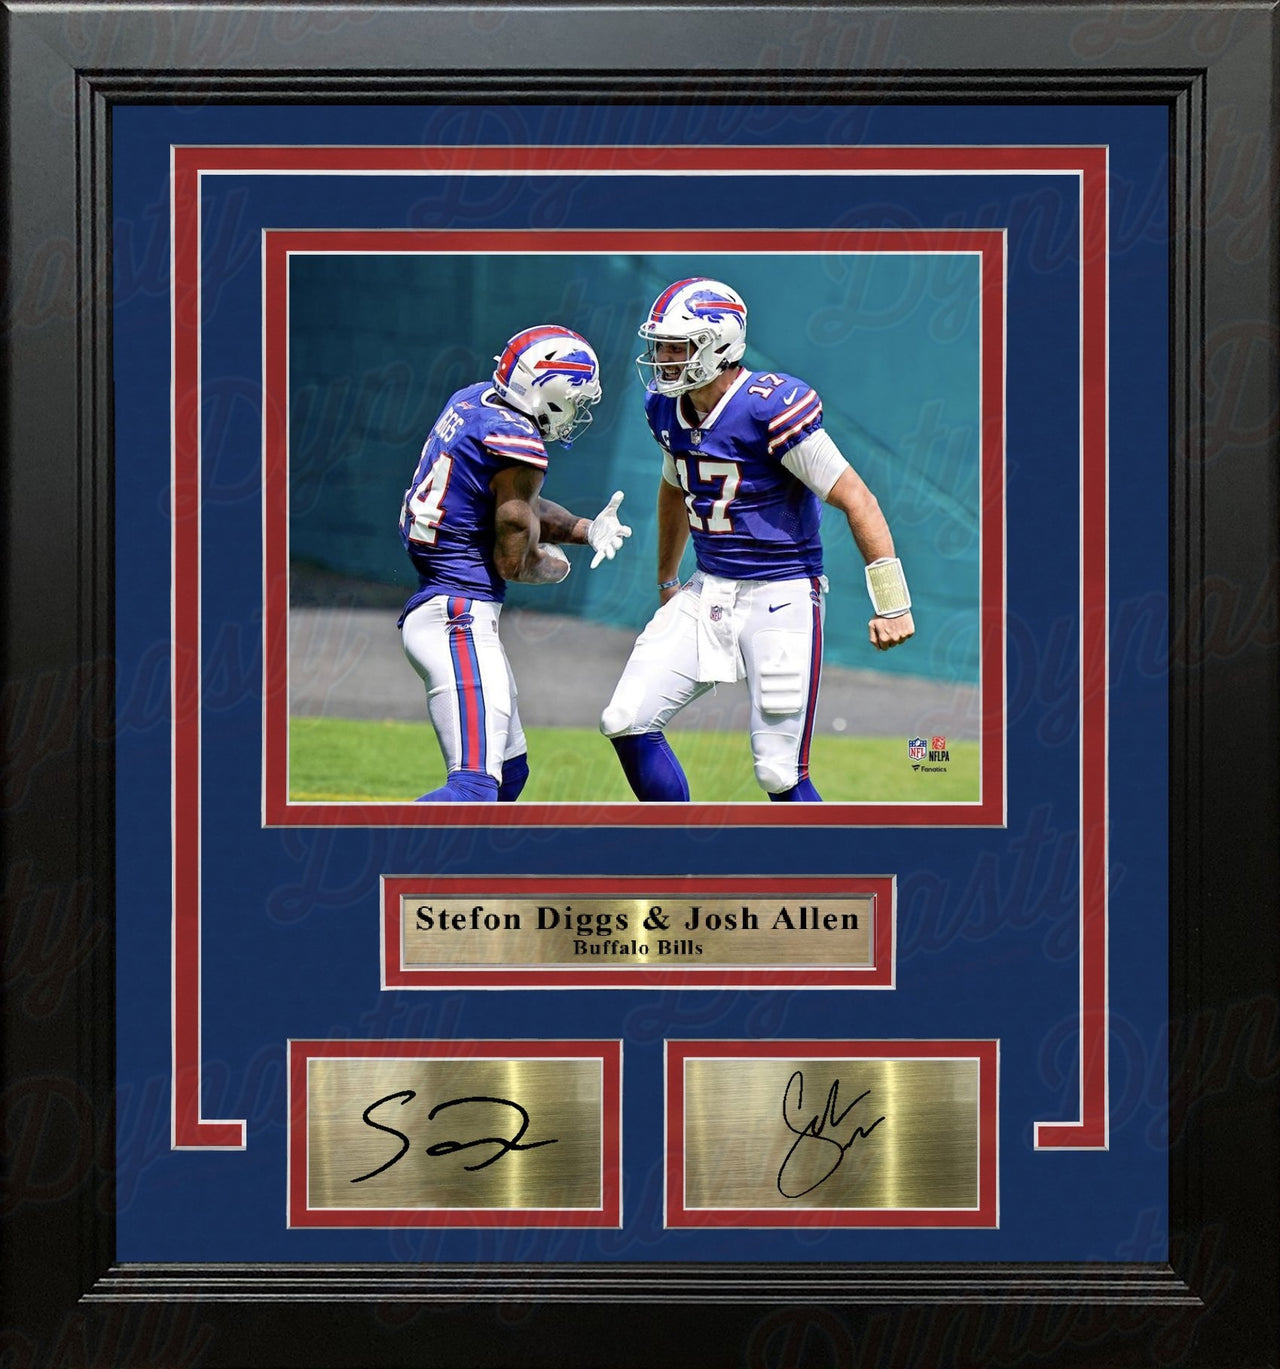 Stefon Diggs & Josh Allen Buffalo Bills 8" x 10" Framed Football Photo with Engraved Autographs - Dynasty Sports & Framing 